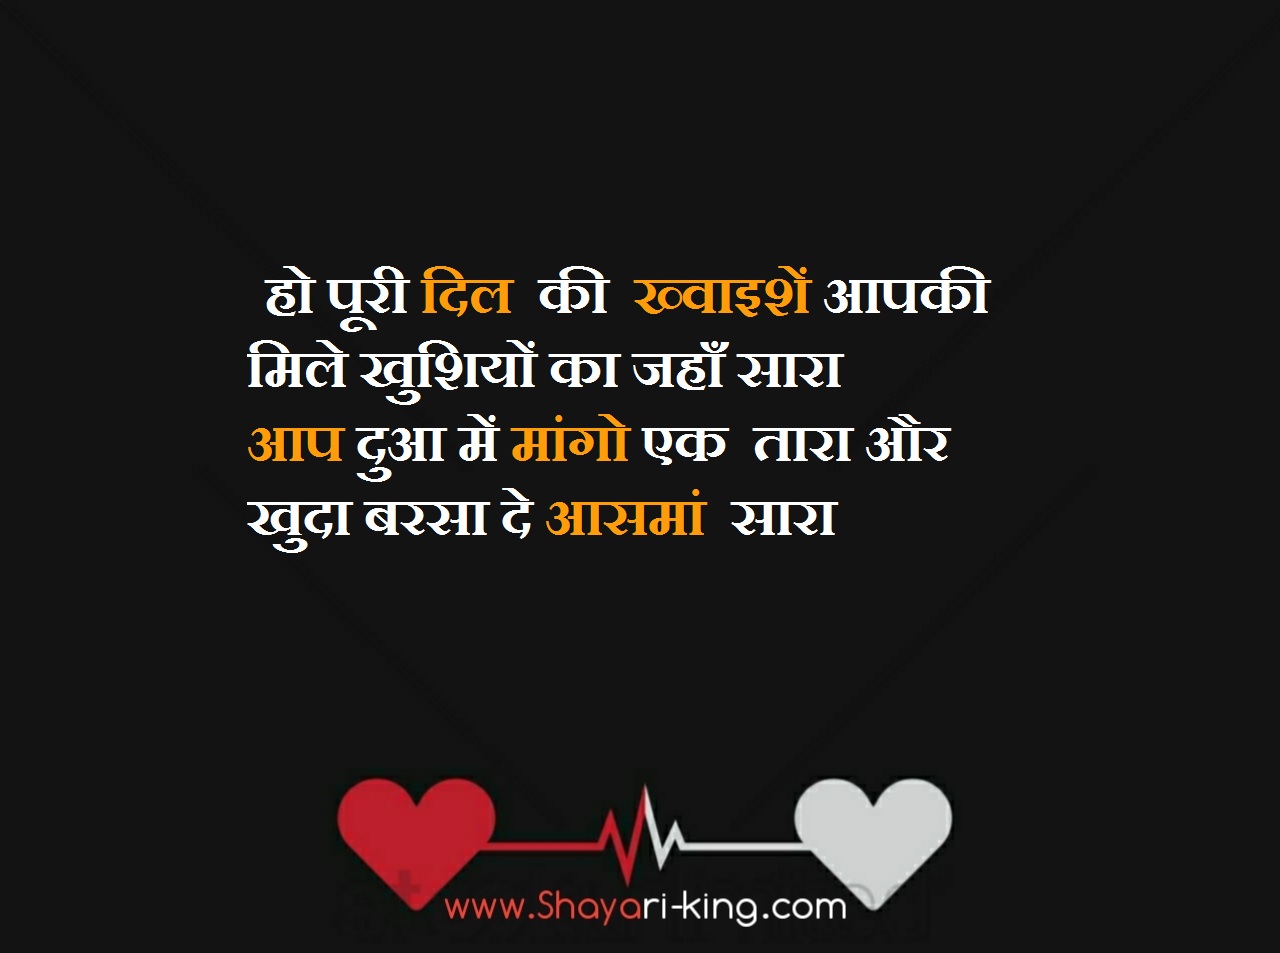 Birthday wish for girlfriend in hindi - Shayari King